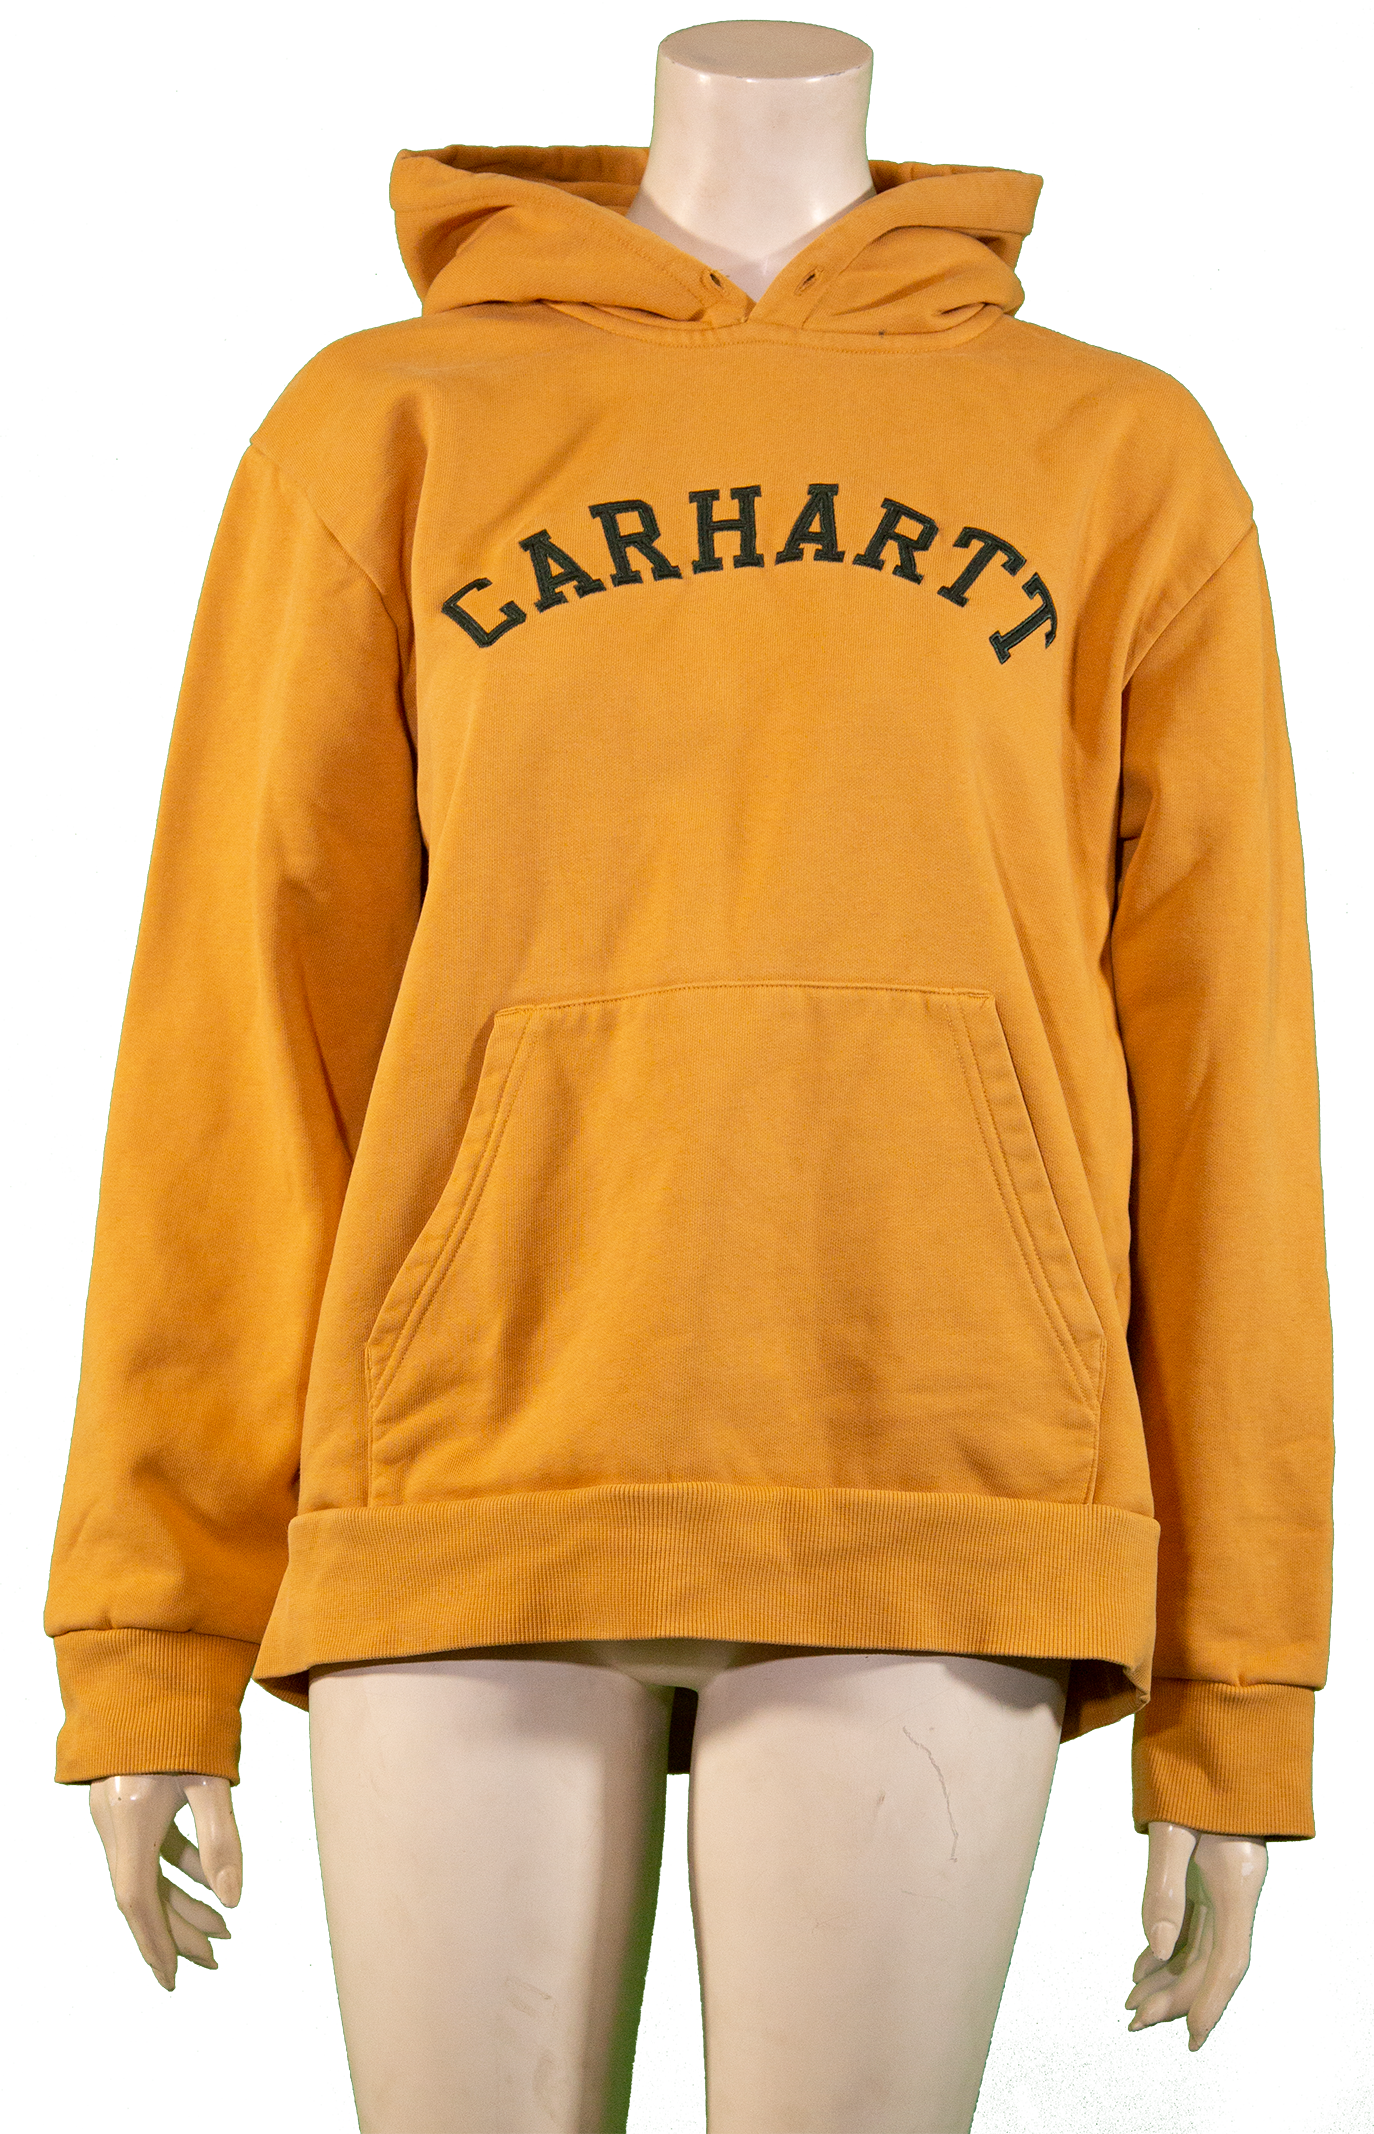 MIX CARHARTT CLOTHING